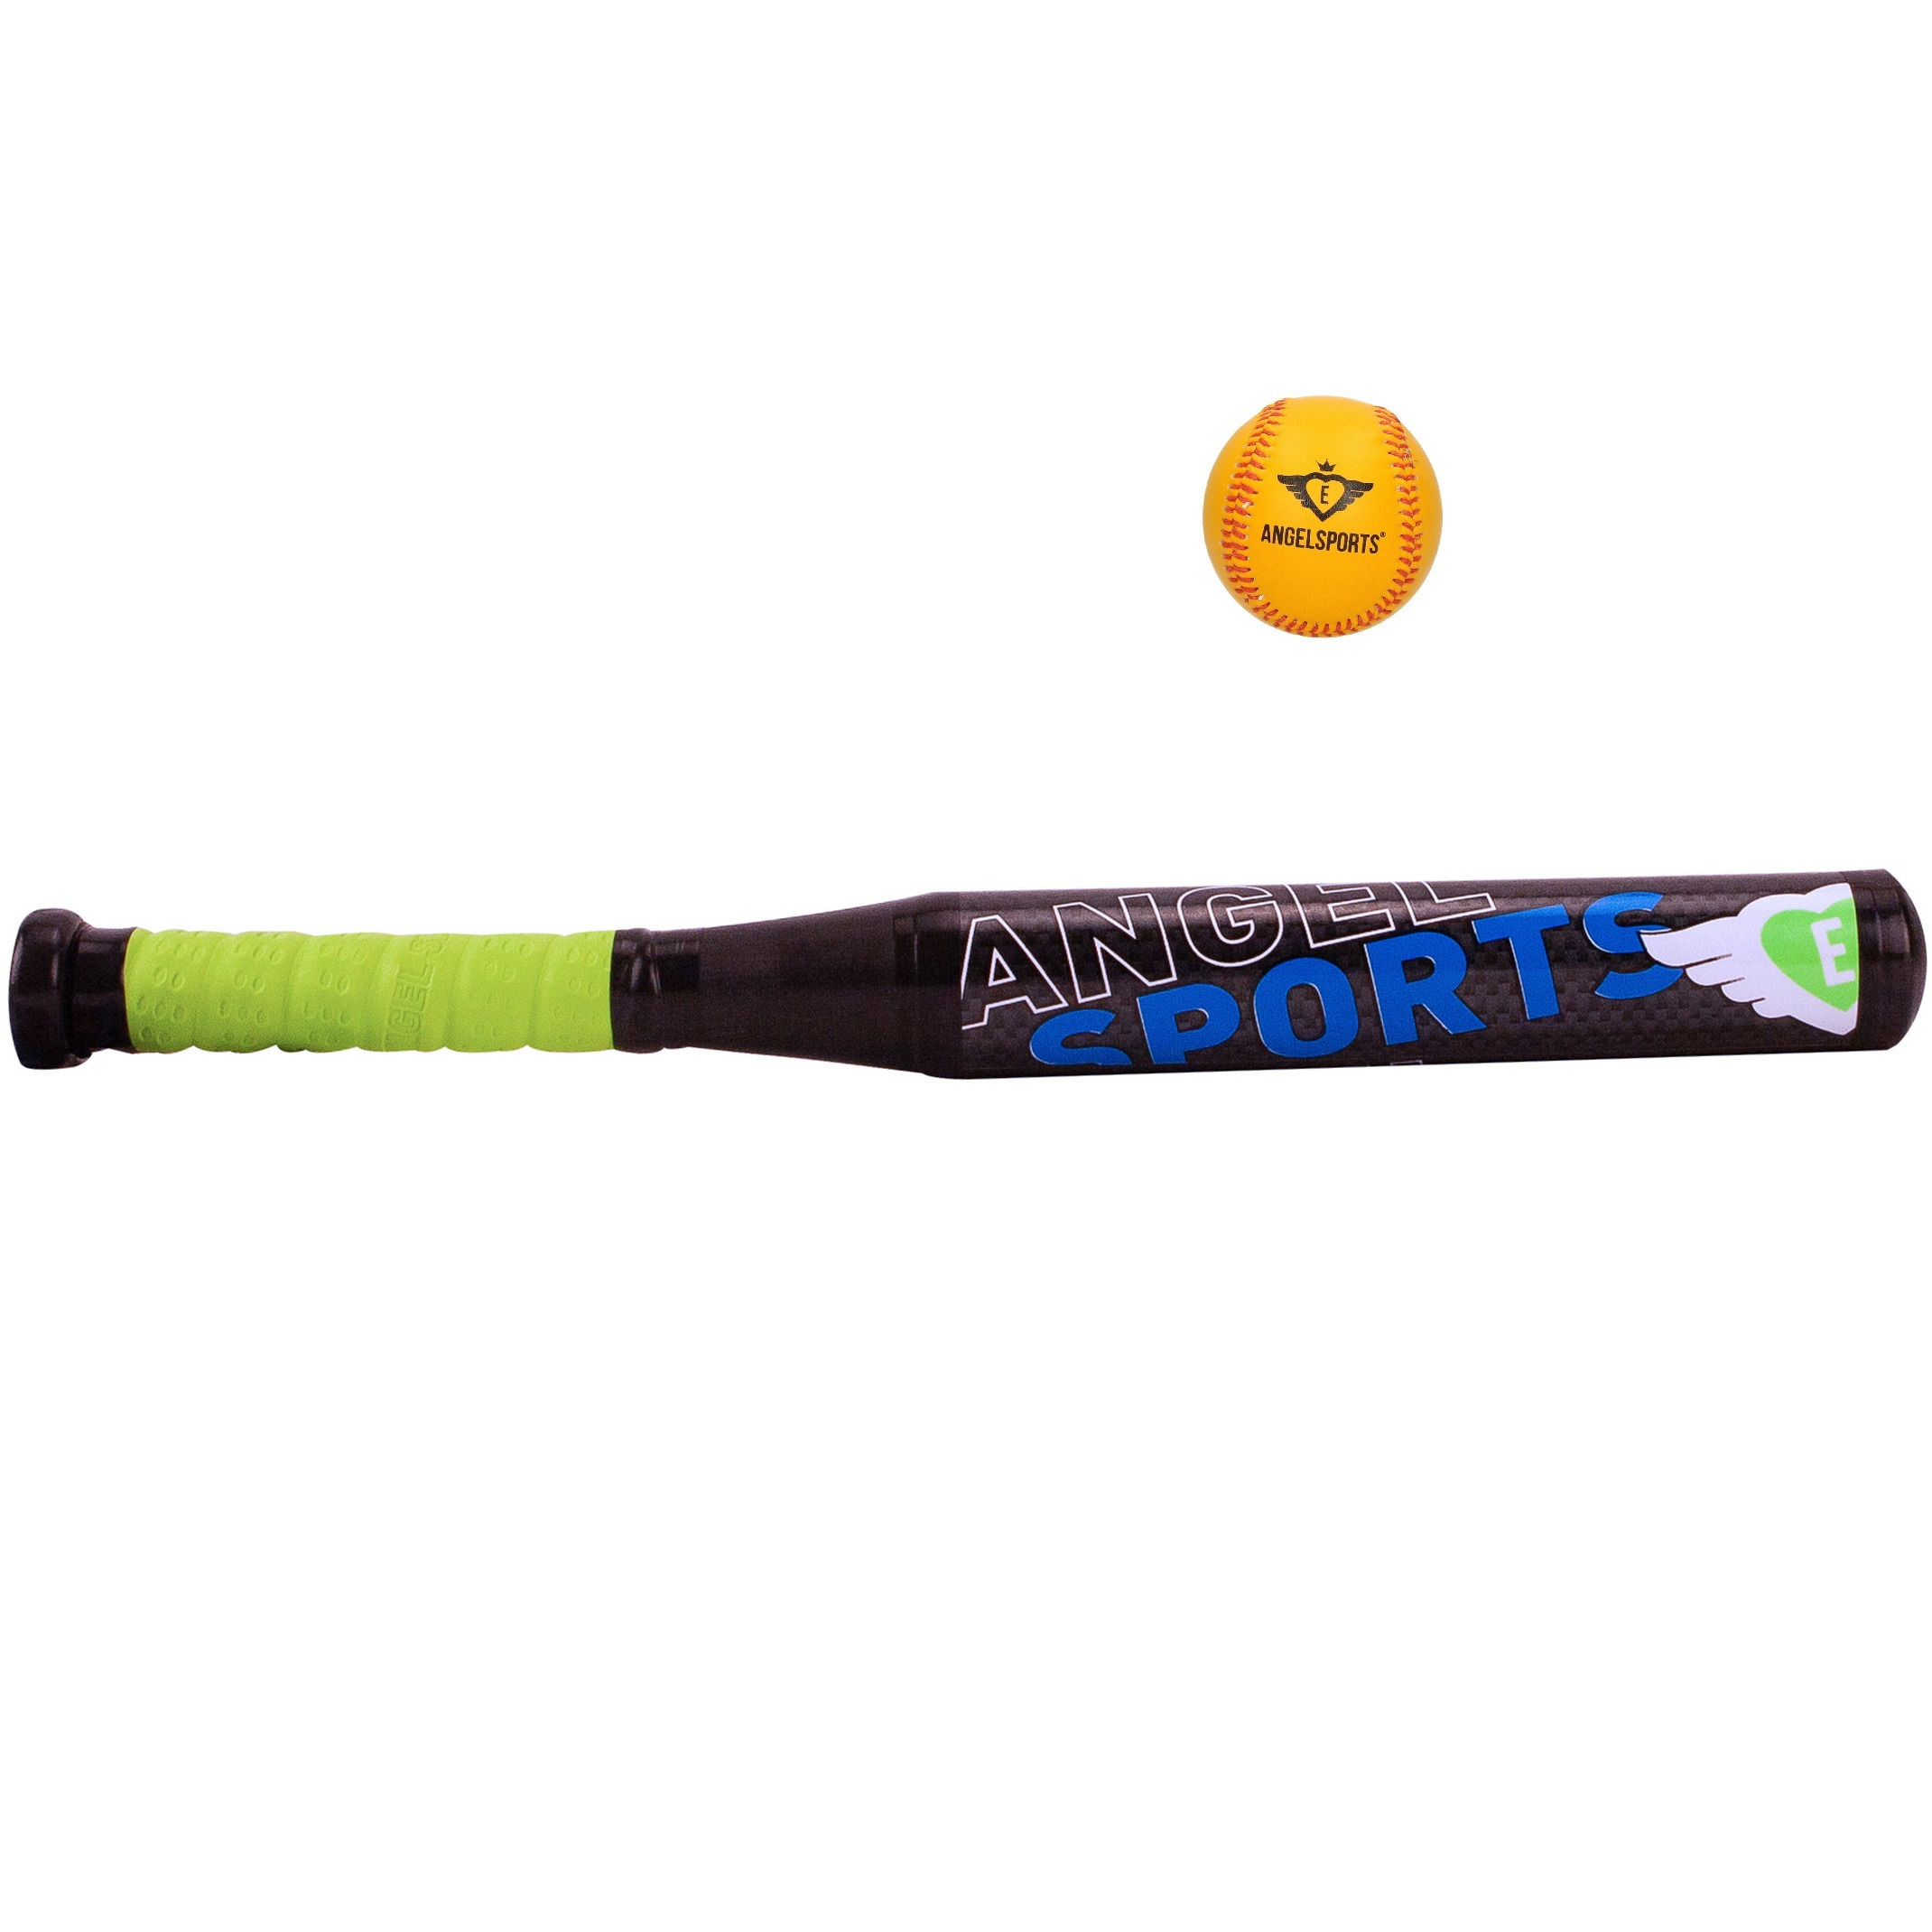 Honkbalknuppel kunststof zwart/groen 45 cm + honkbal/softbal oranje / geel 10 cm